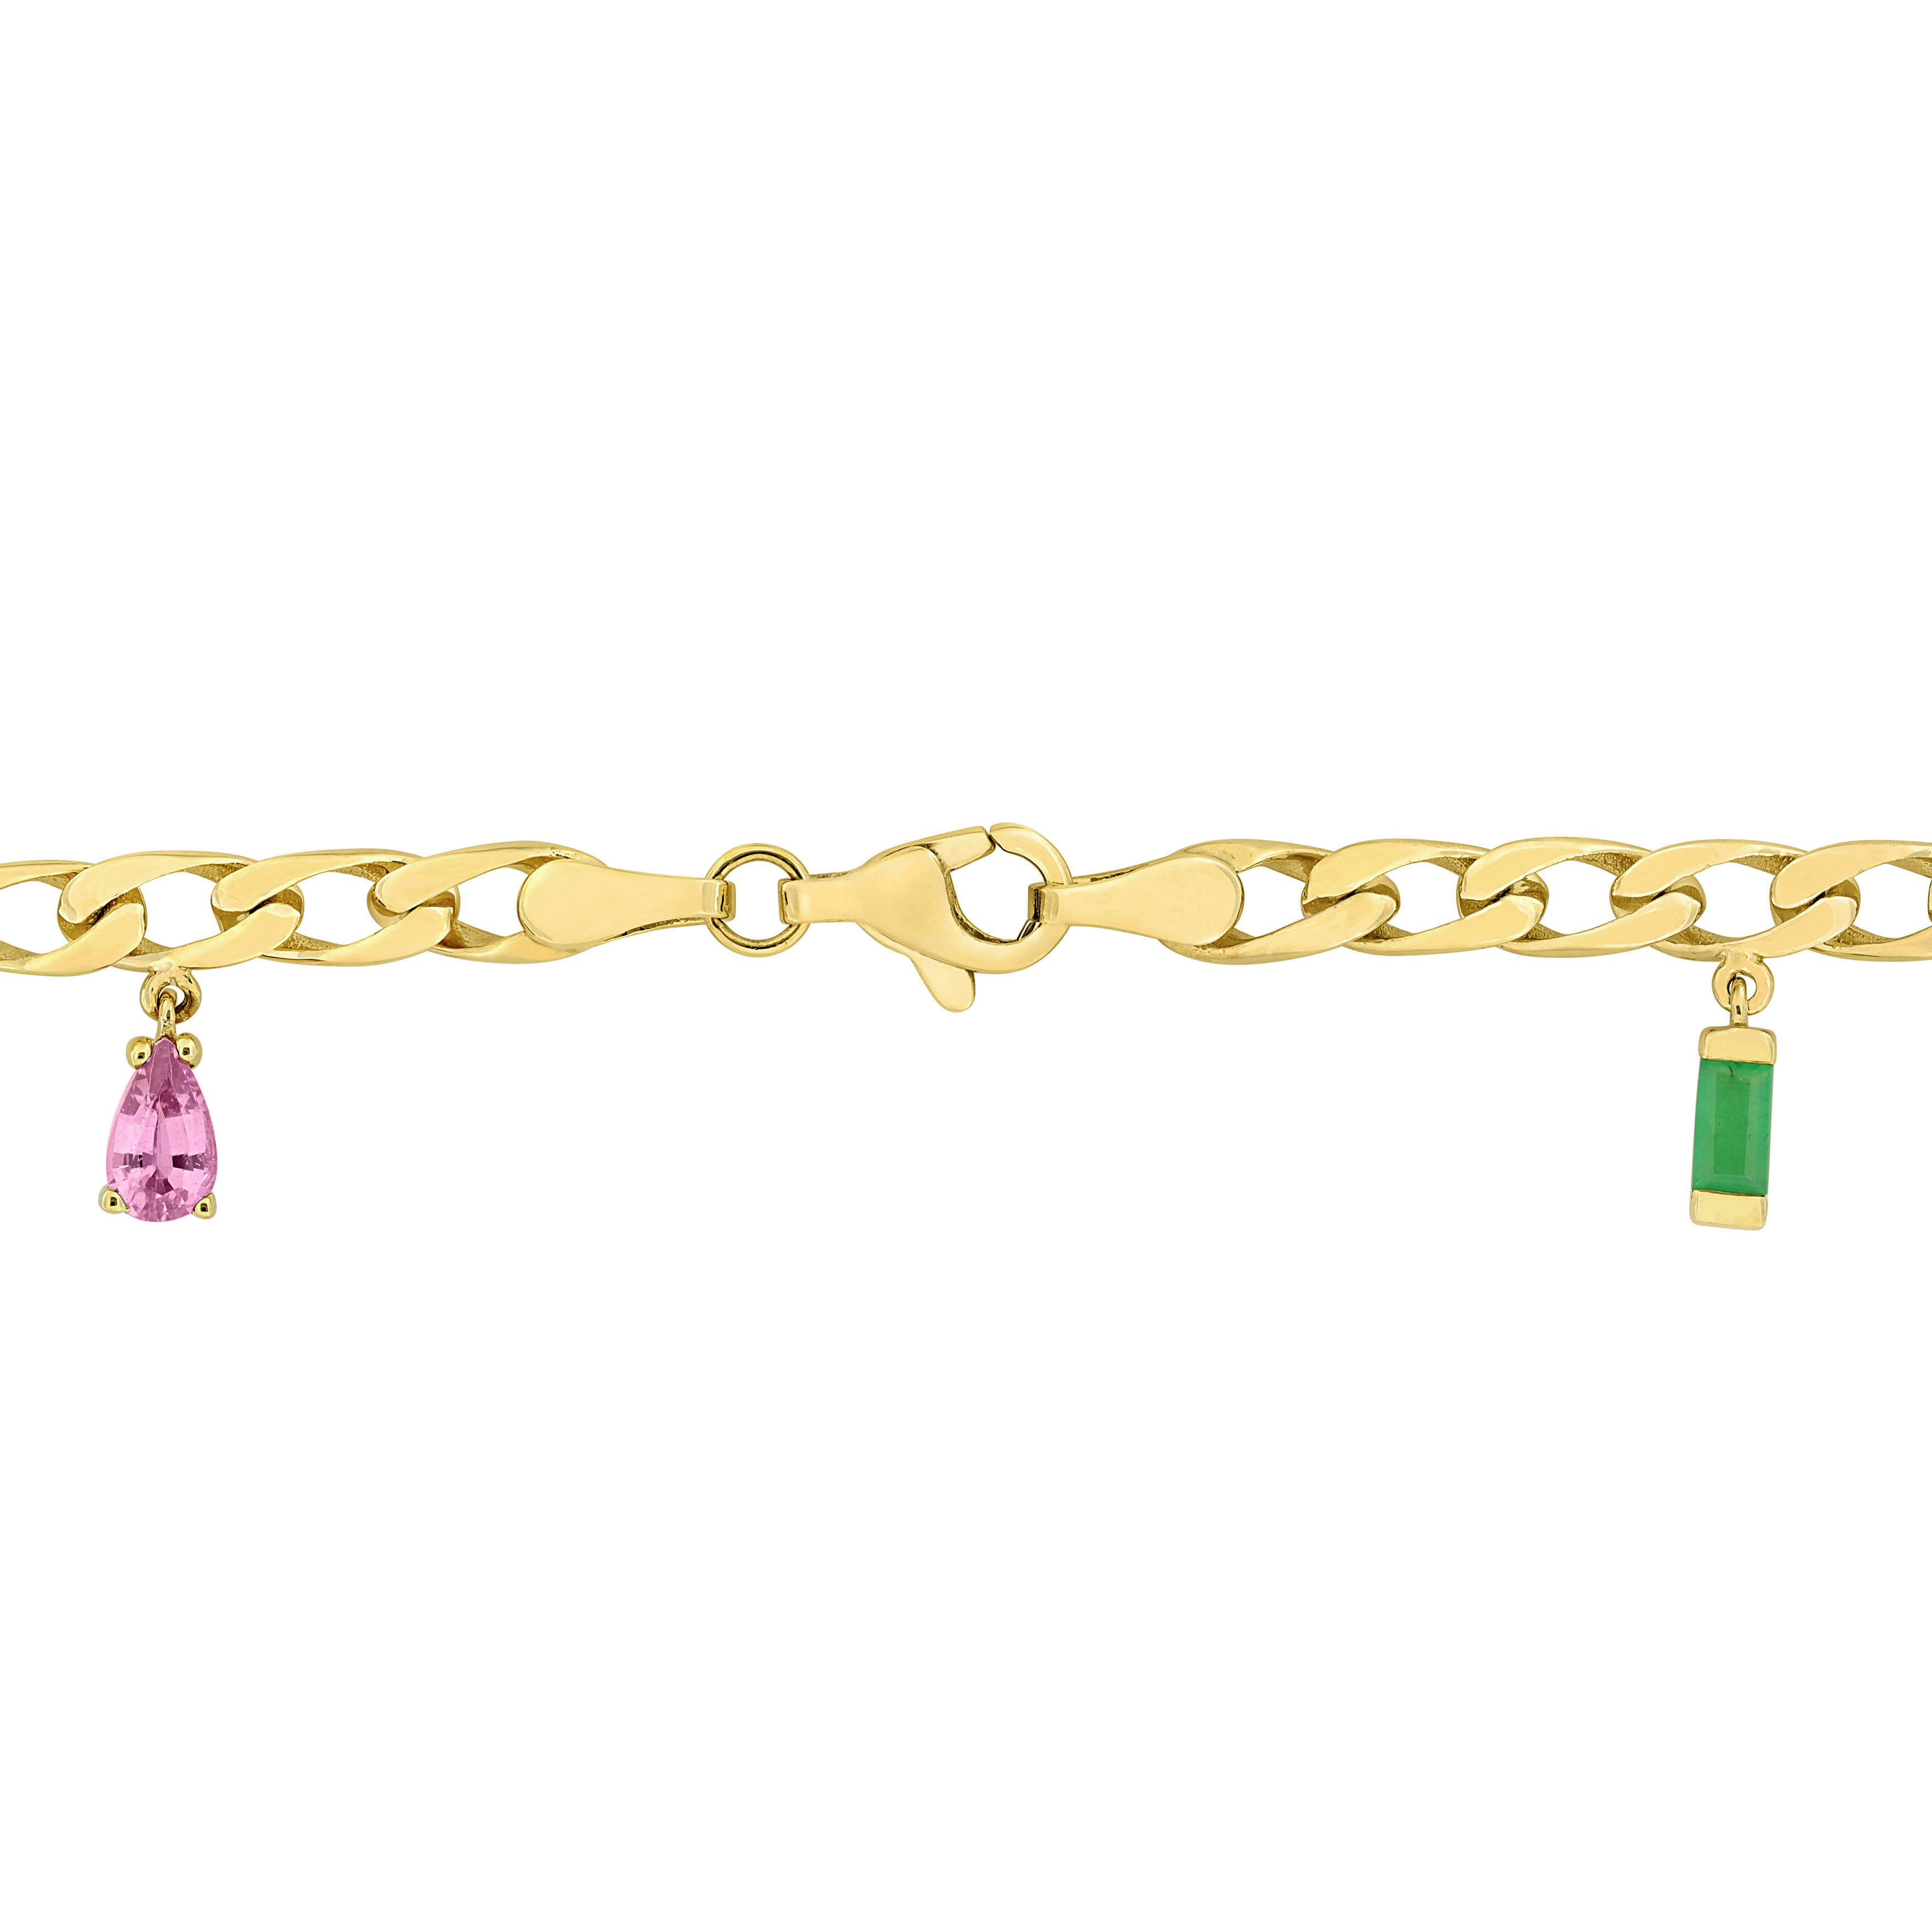 1 1/3 CT TGW Multi-Color Sapphire Ruby Emerald Charm Bracelet in 10k Yellow Gold - 7.5 in.